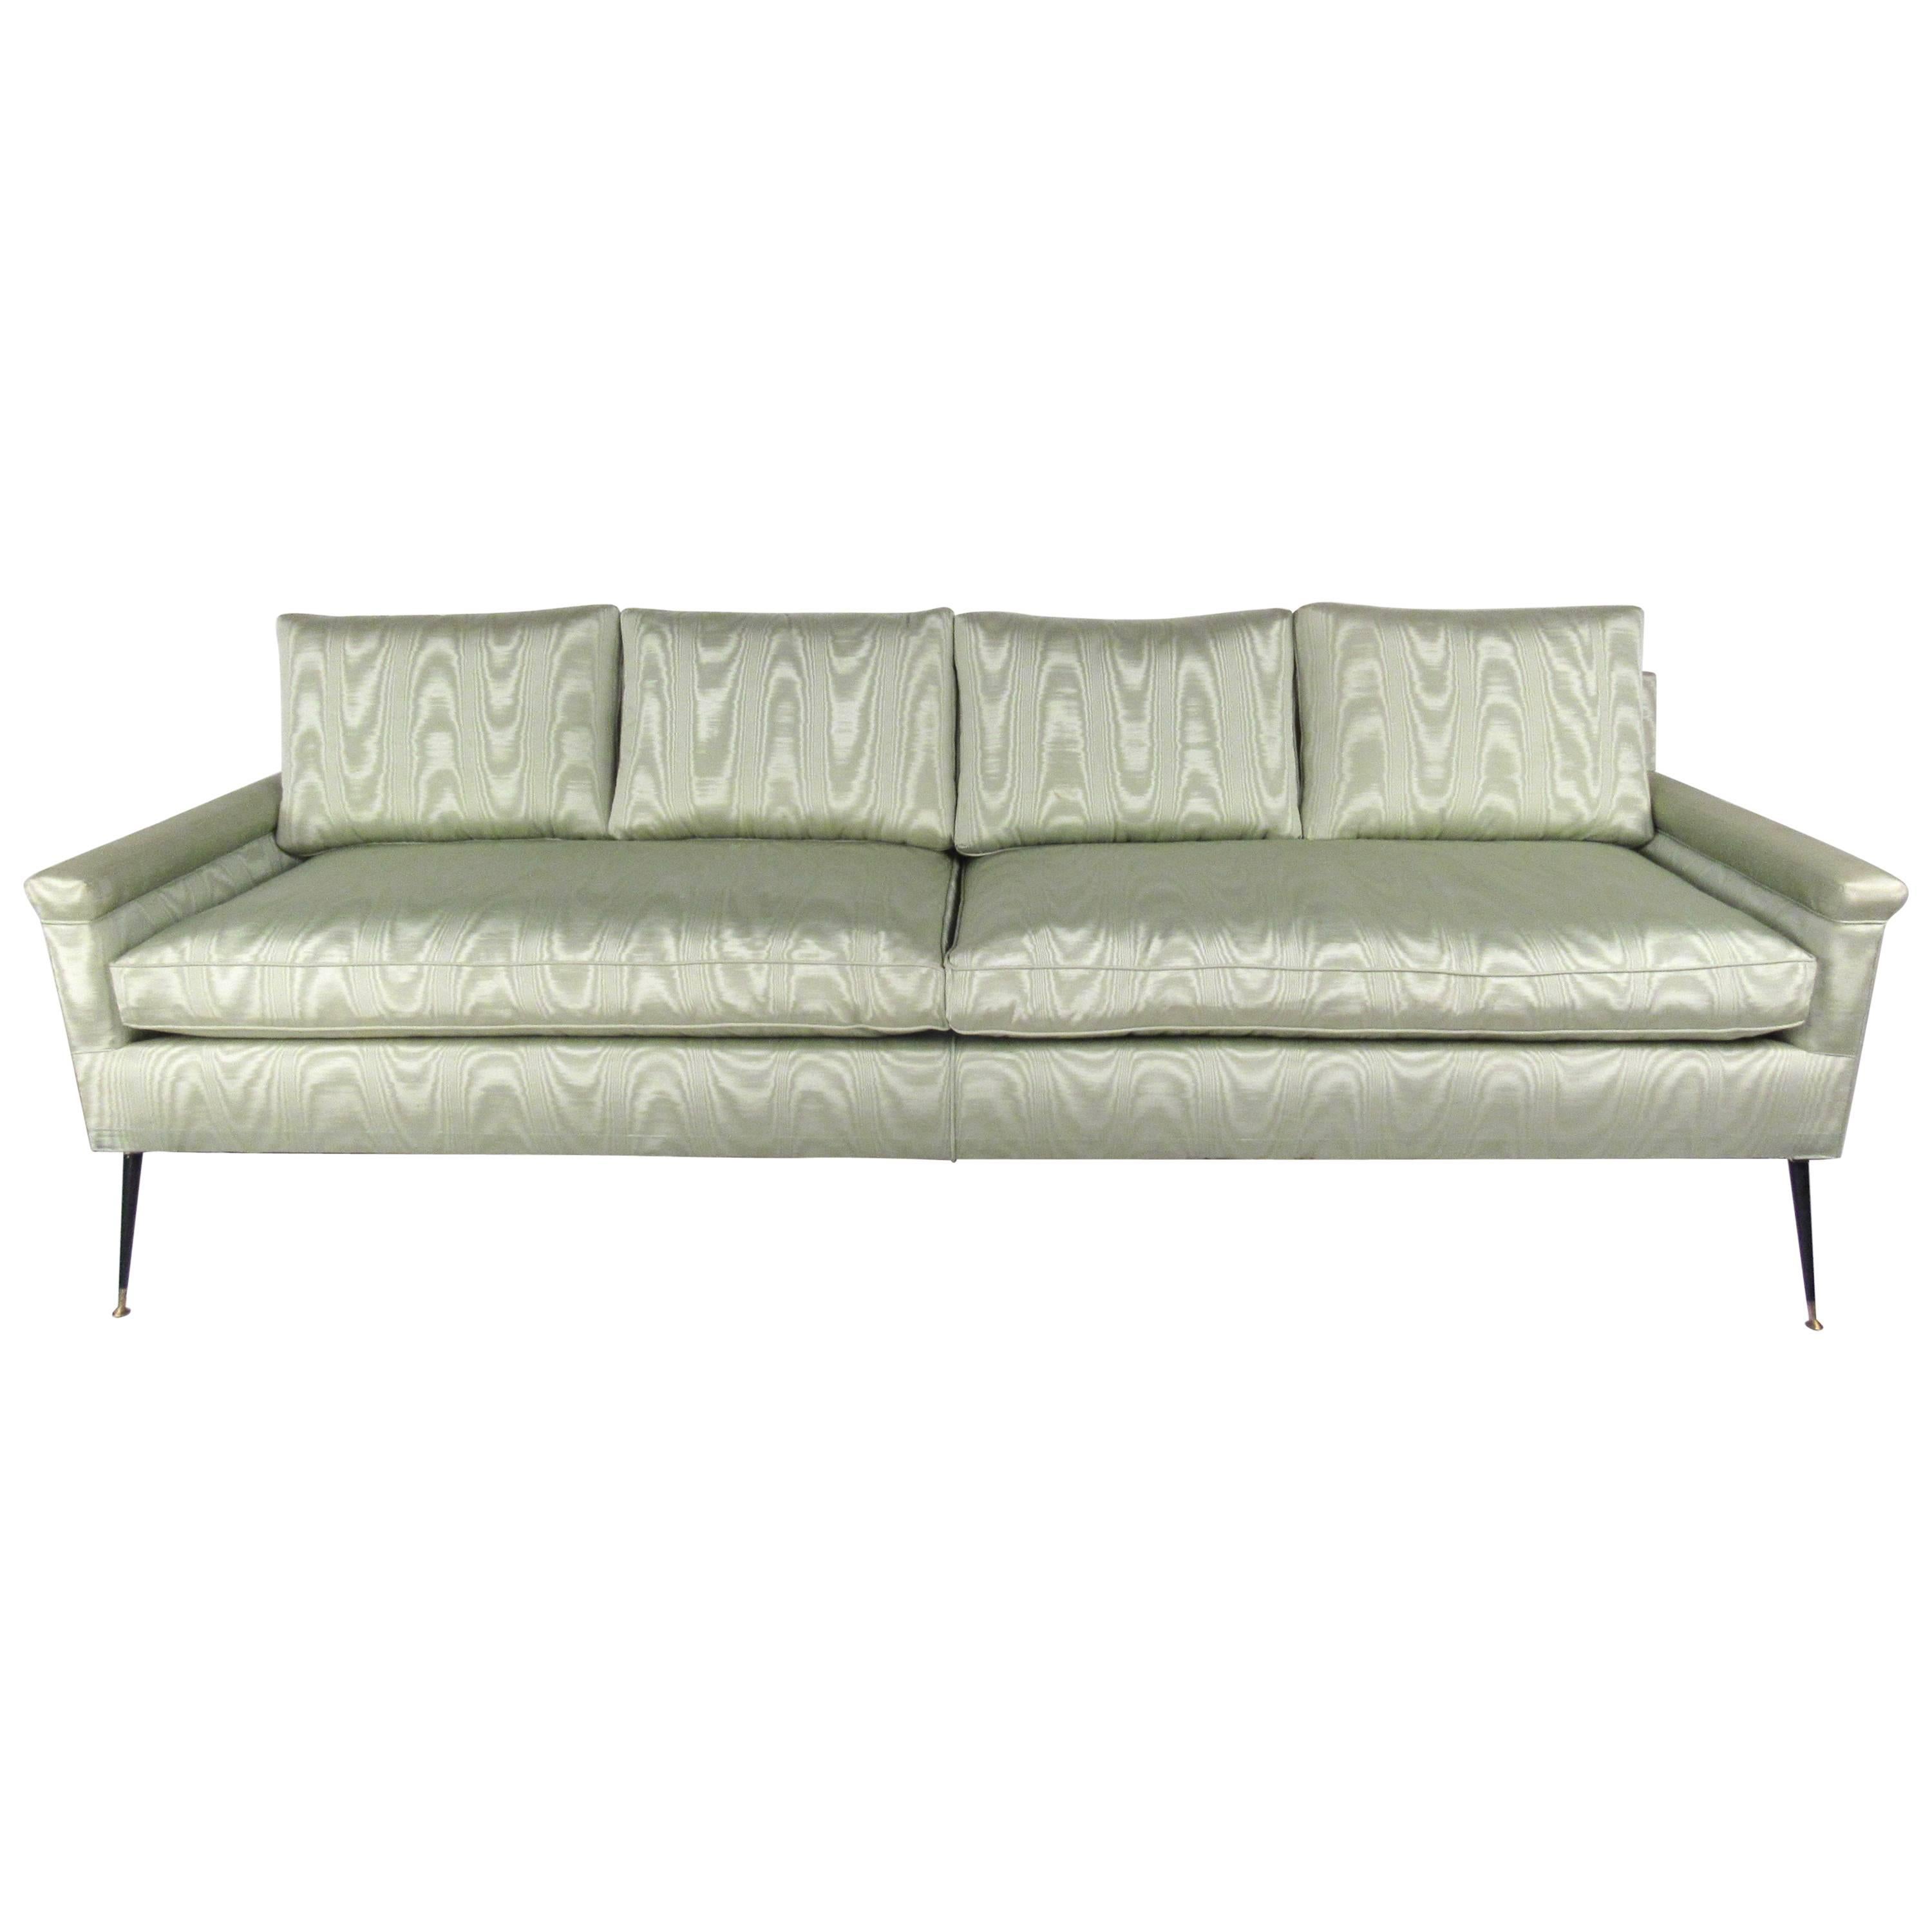 Mid-Century Modern Italian Style Sofa For Sale